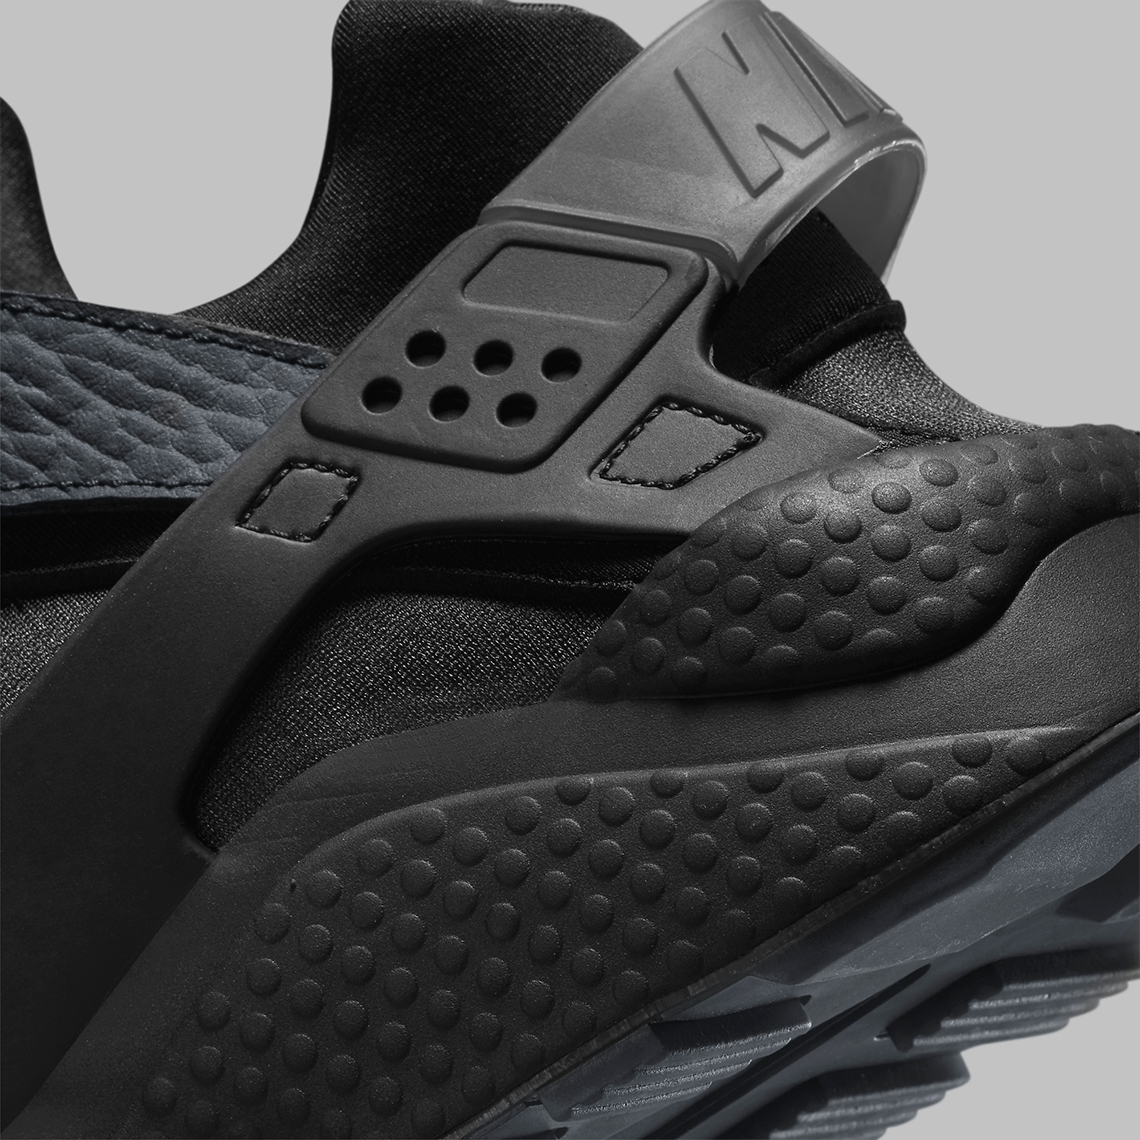 Nike Air Huarache Black Tumbled Leather | SneakerNews.com